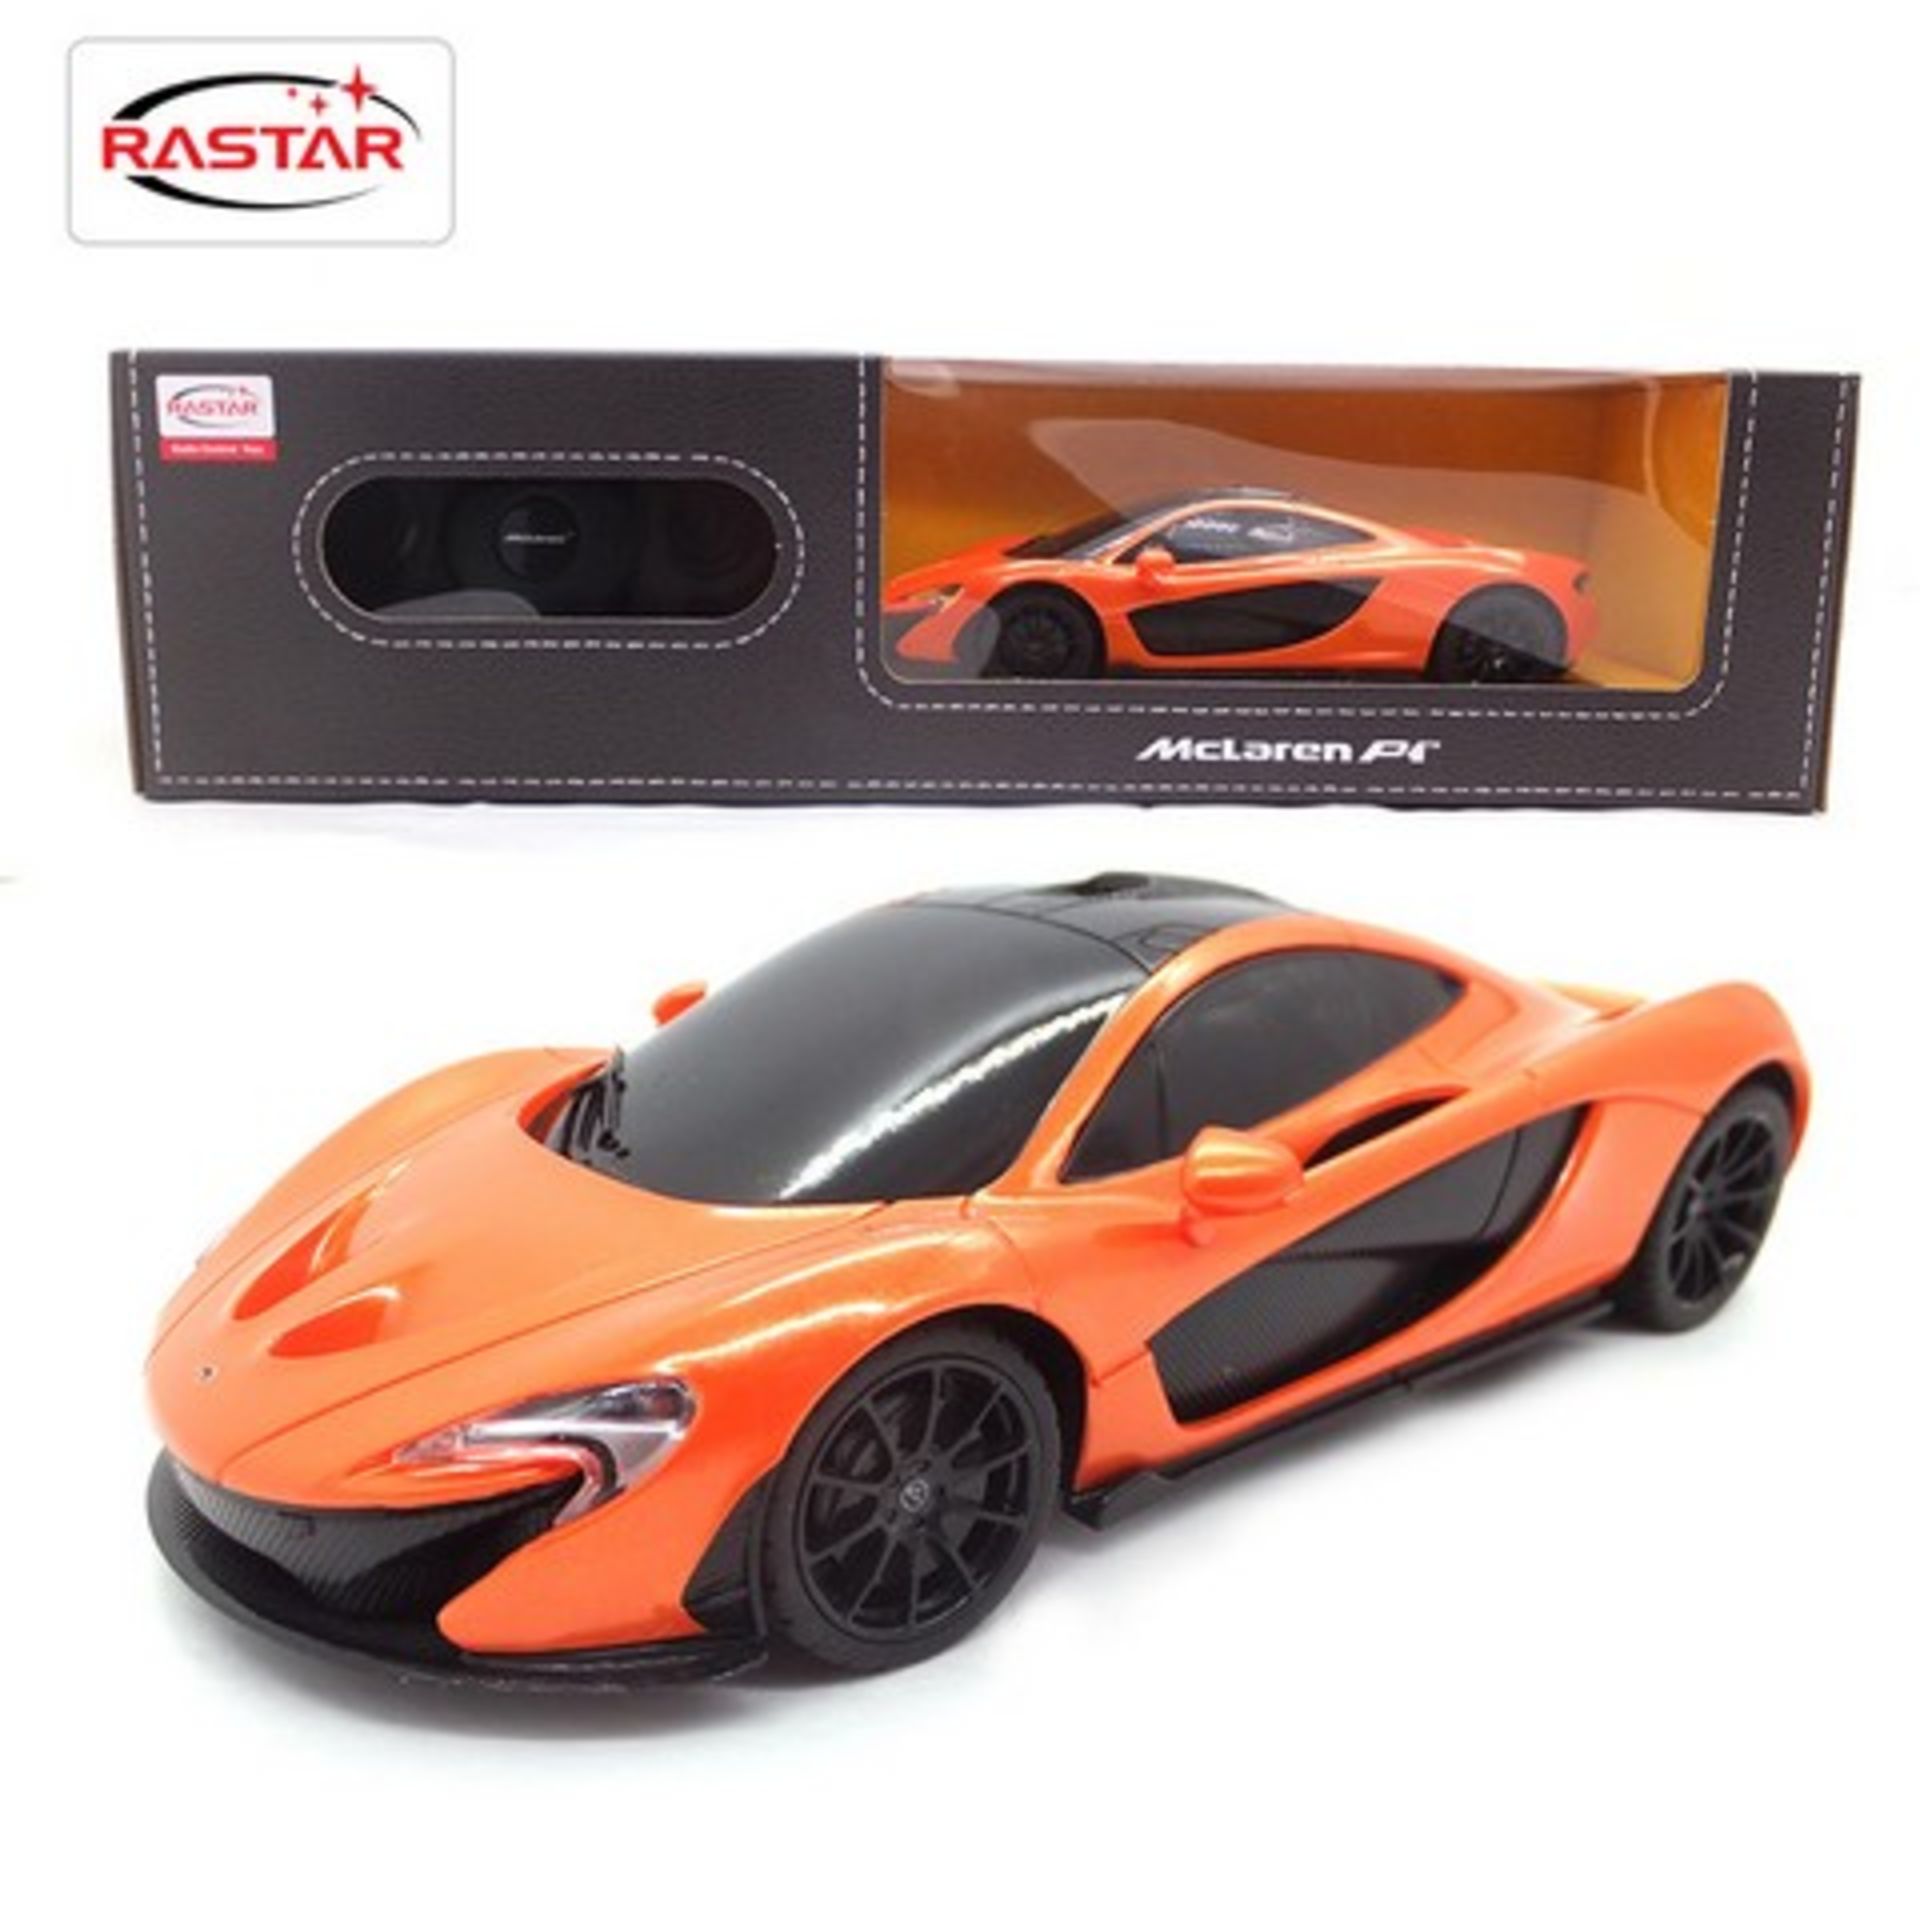 + VAT Brand New McLaren P1 Full Function Radio Controlled Car - ISP £22.99 (Amazon) Similar Product